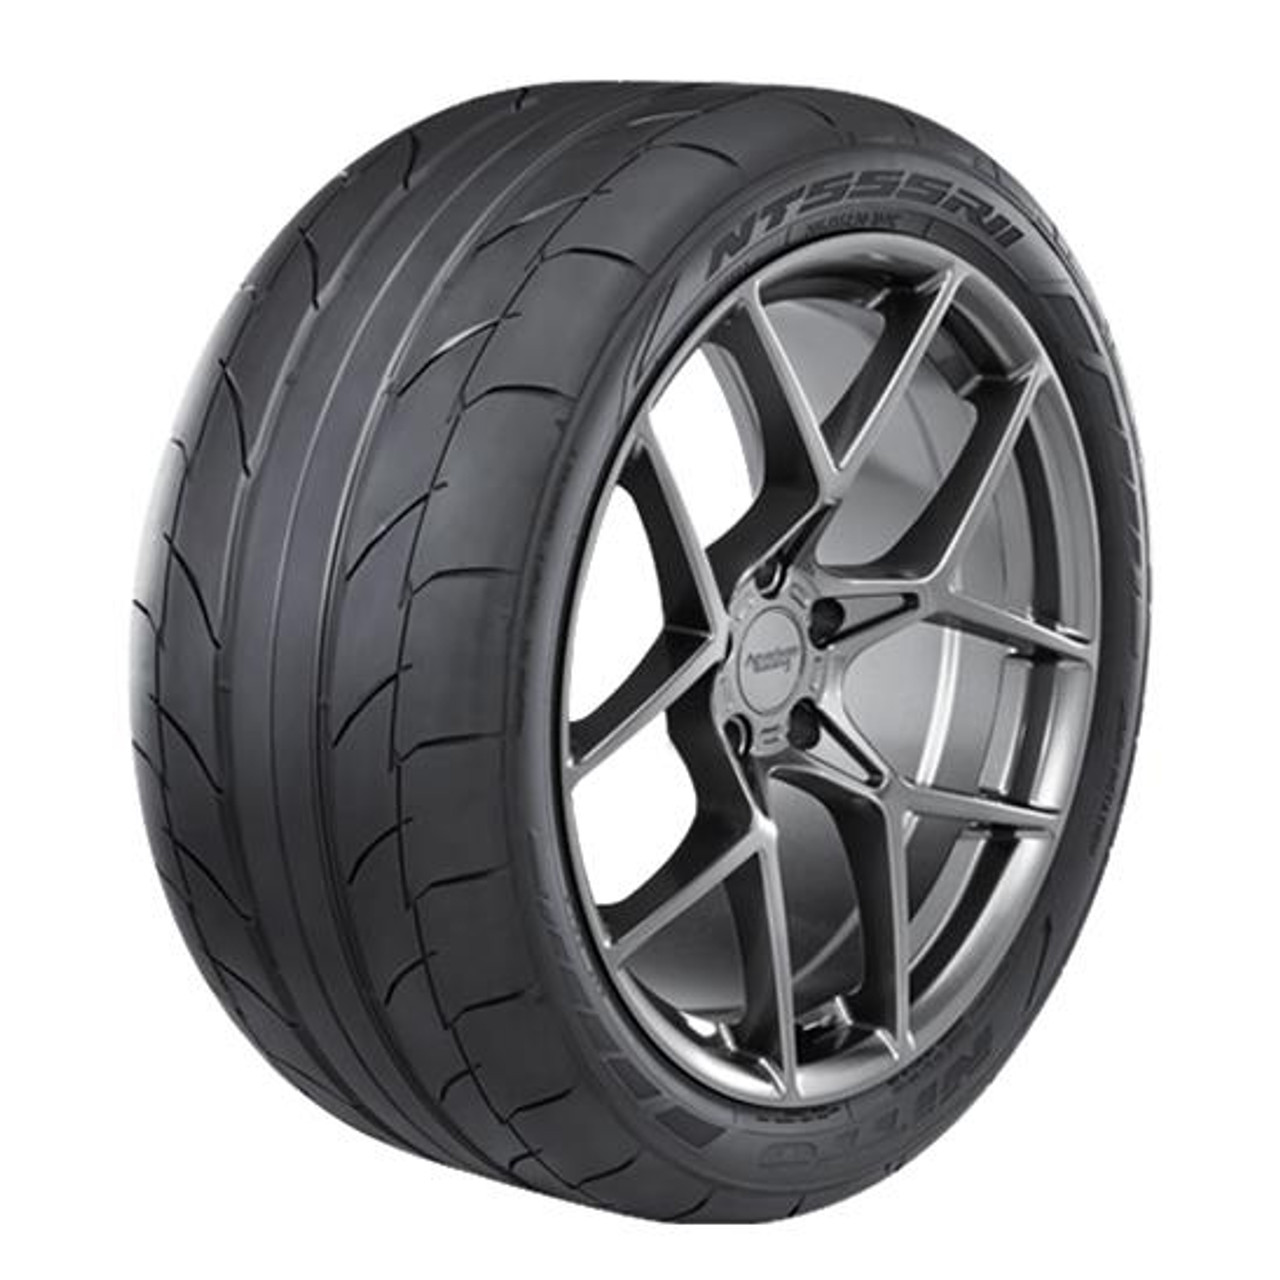 Nitto NT555R II 305/45/17 Drag Radial Tire